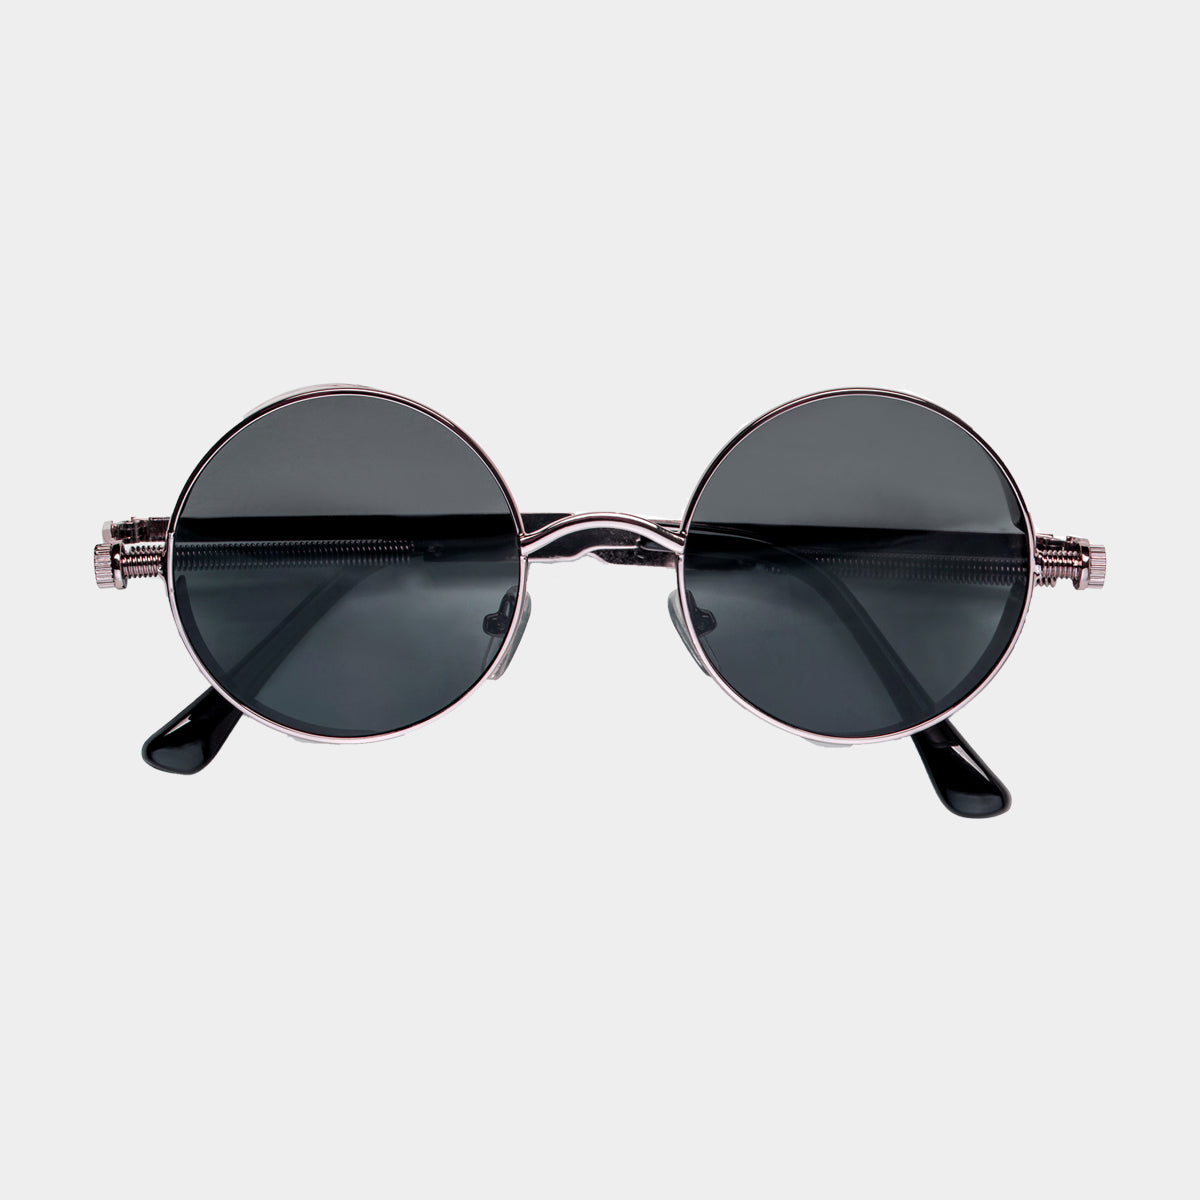 Eclipse Elite sunglasses